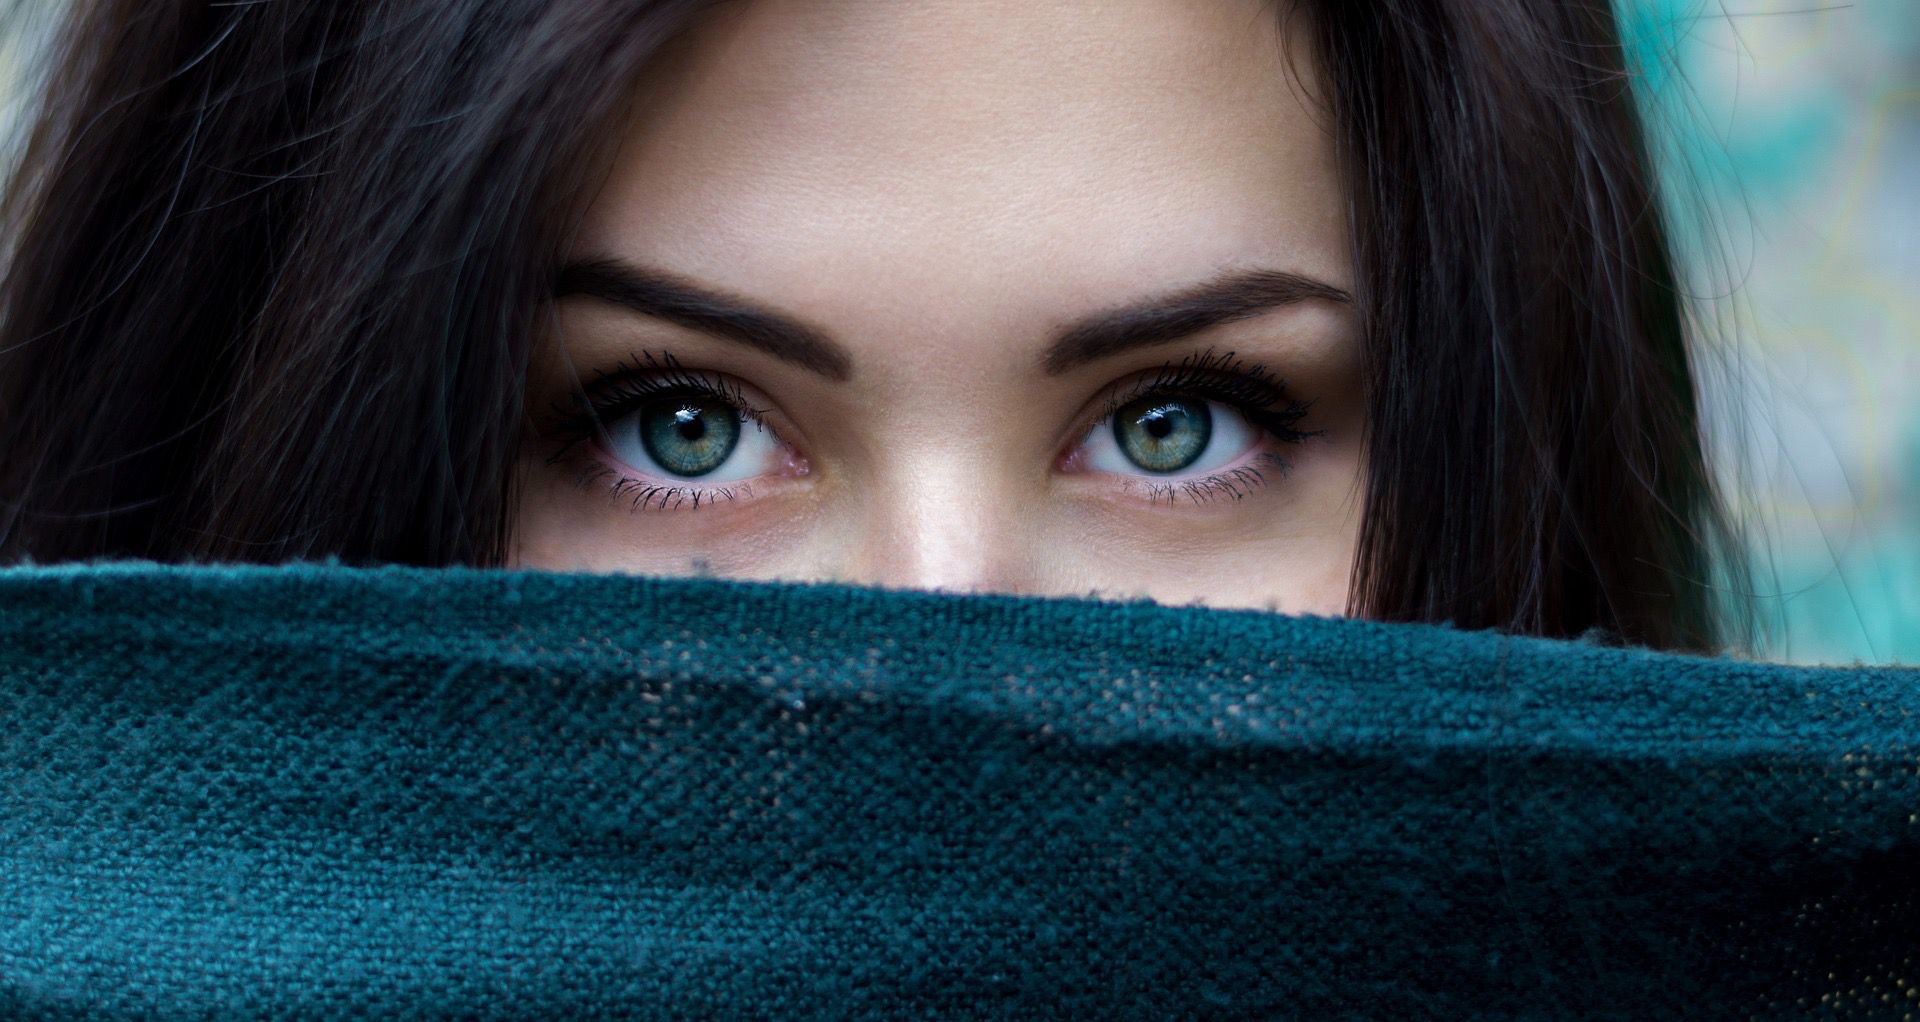 Ochii nu mint: explorăm mințile prin priviri